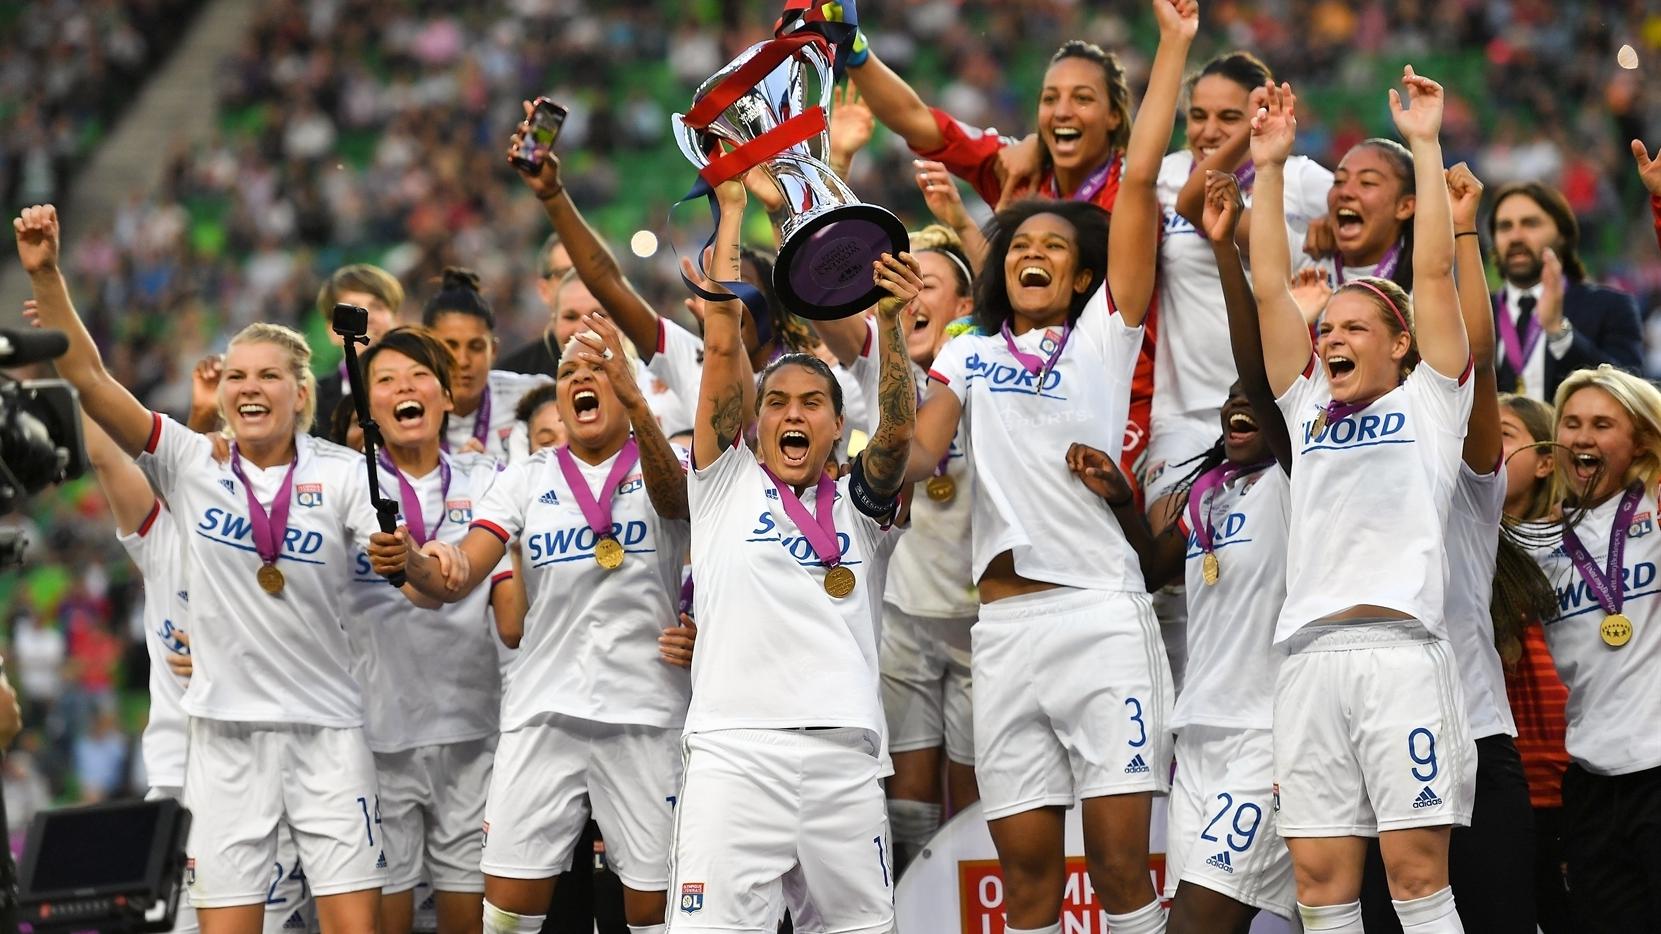 women's champions league final 2019 tickets